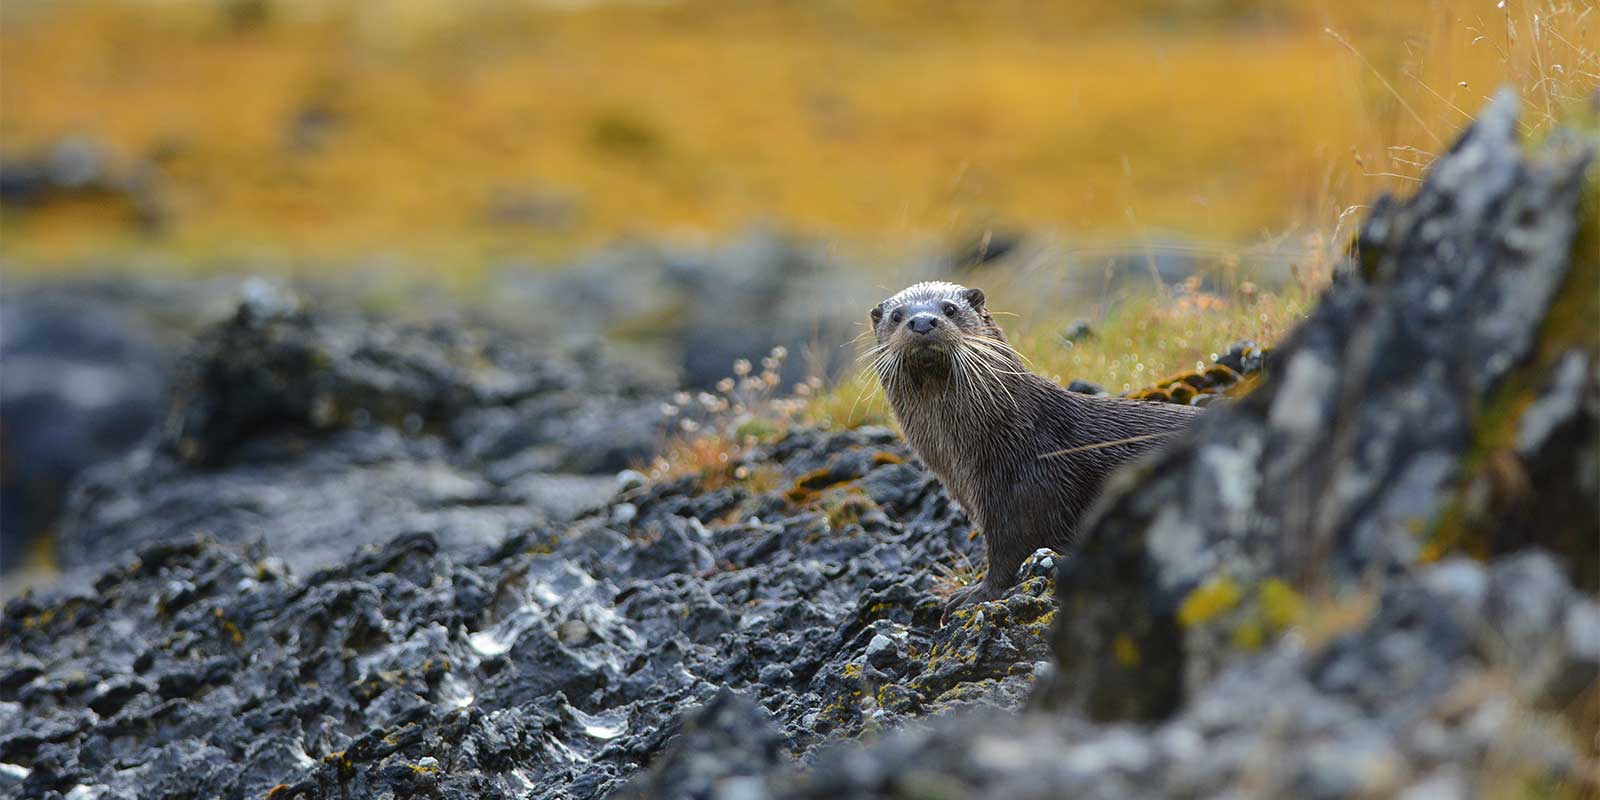 European otter in Isle of Mull, Scotland